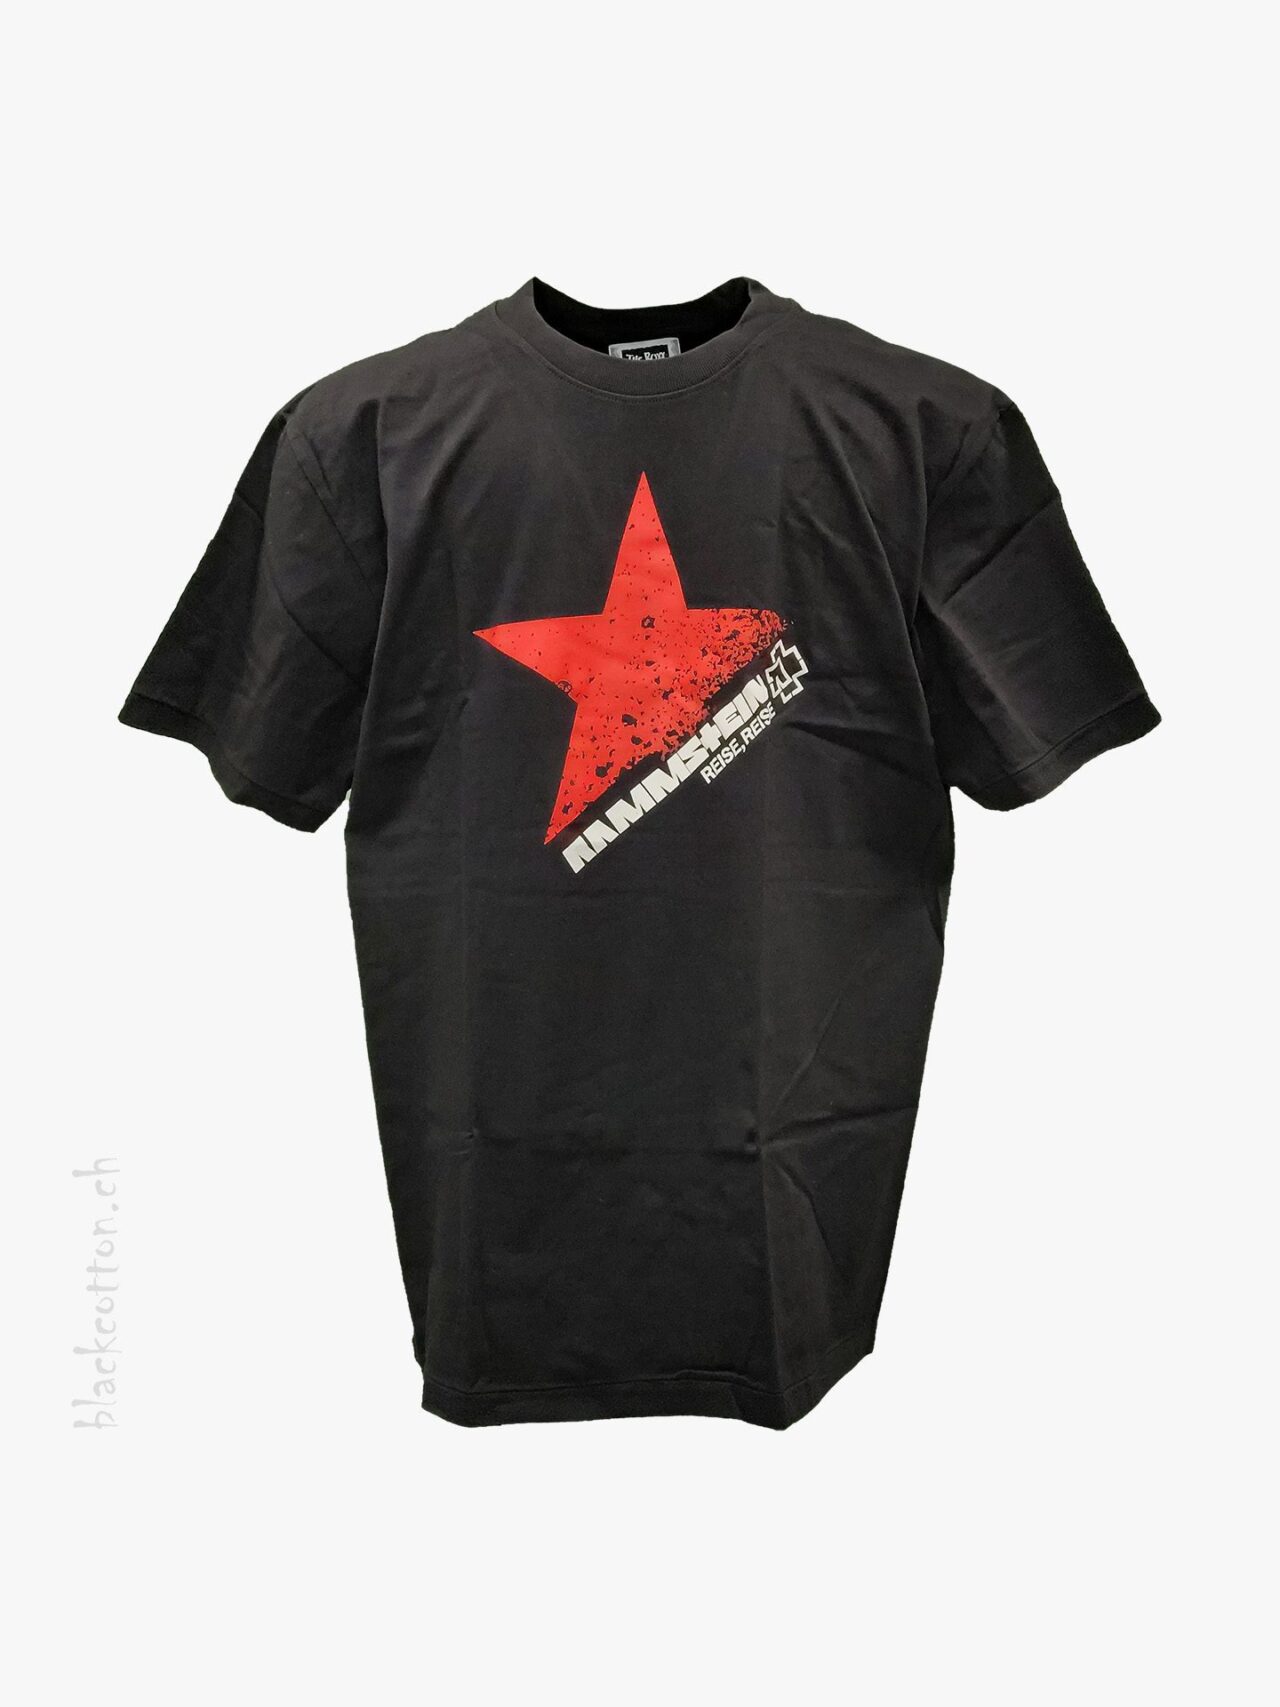 Rammstein - Reise Reise T-Shirt